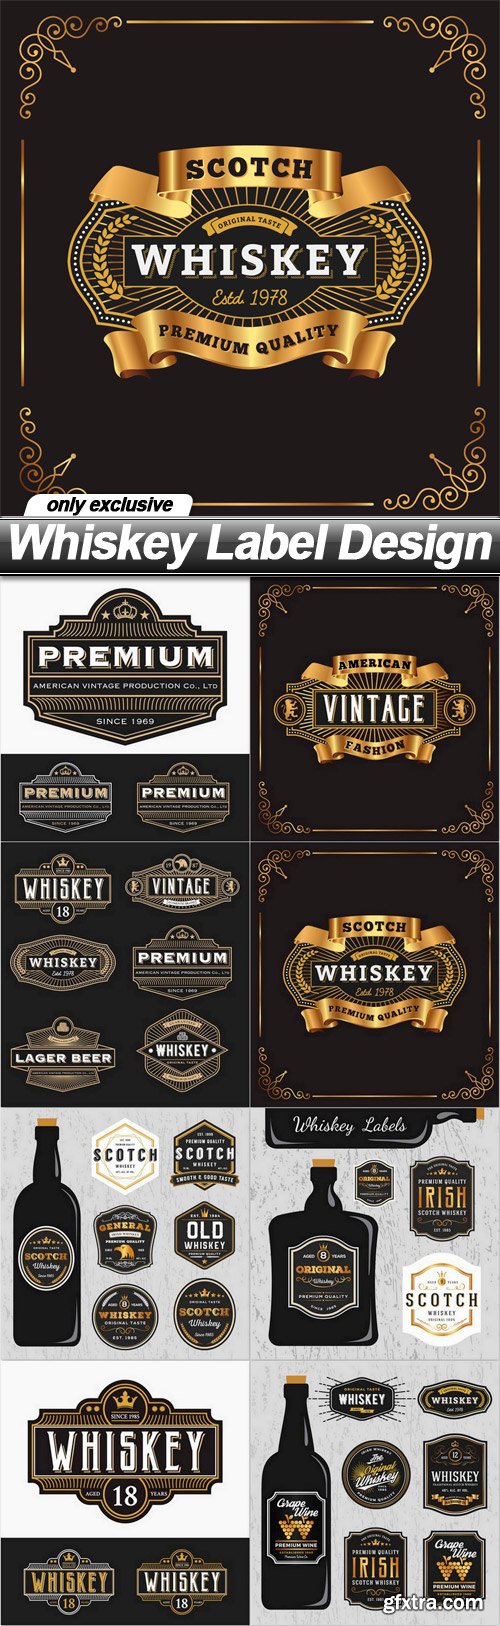 Whiskey Label Design - 8 EPS